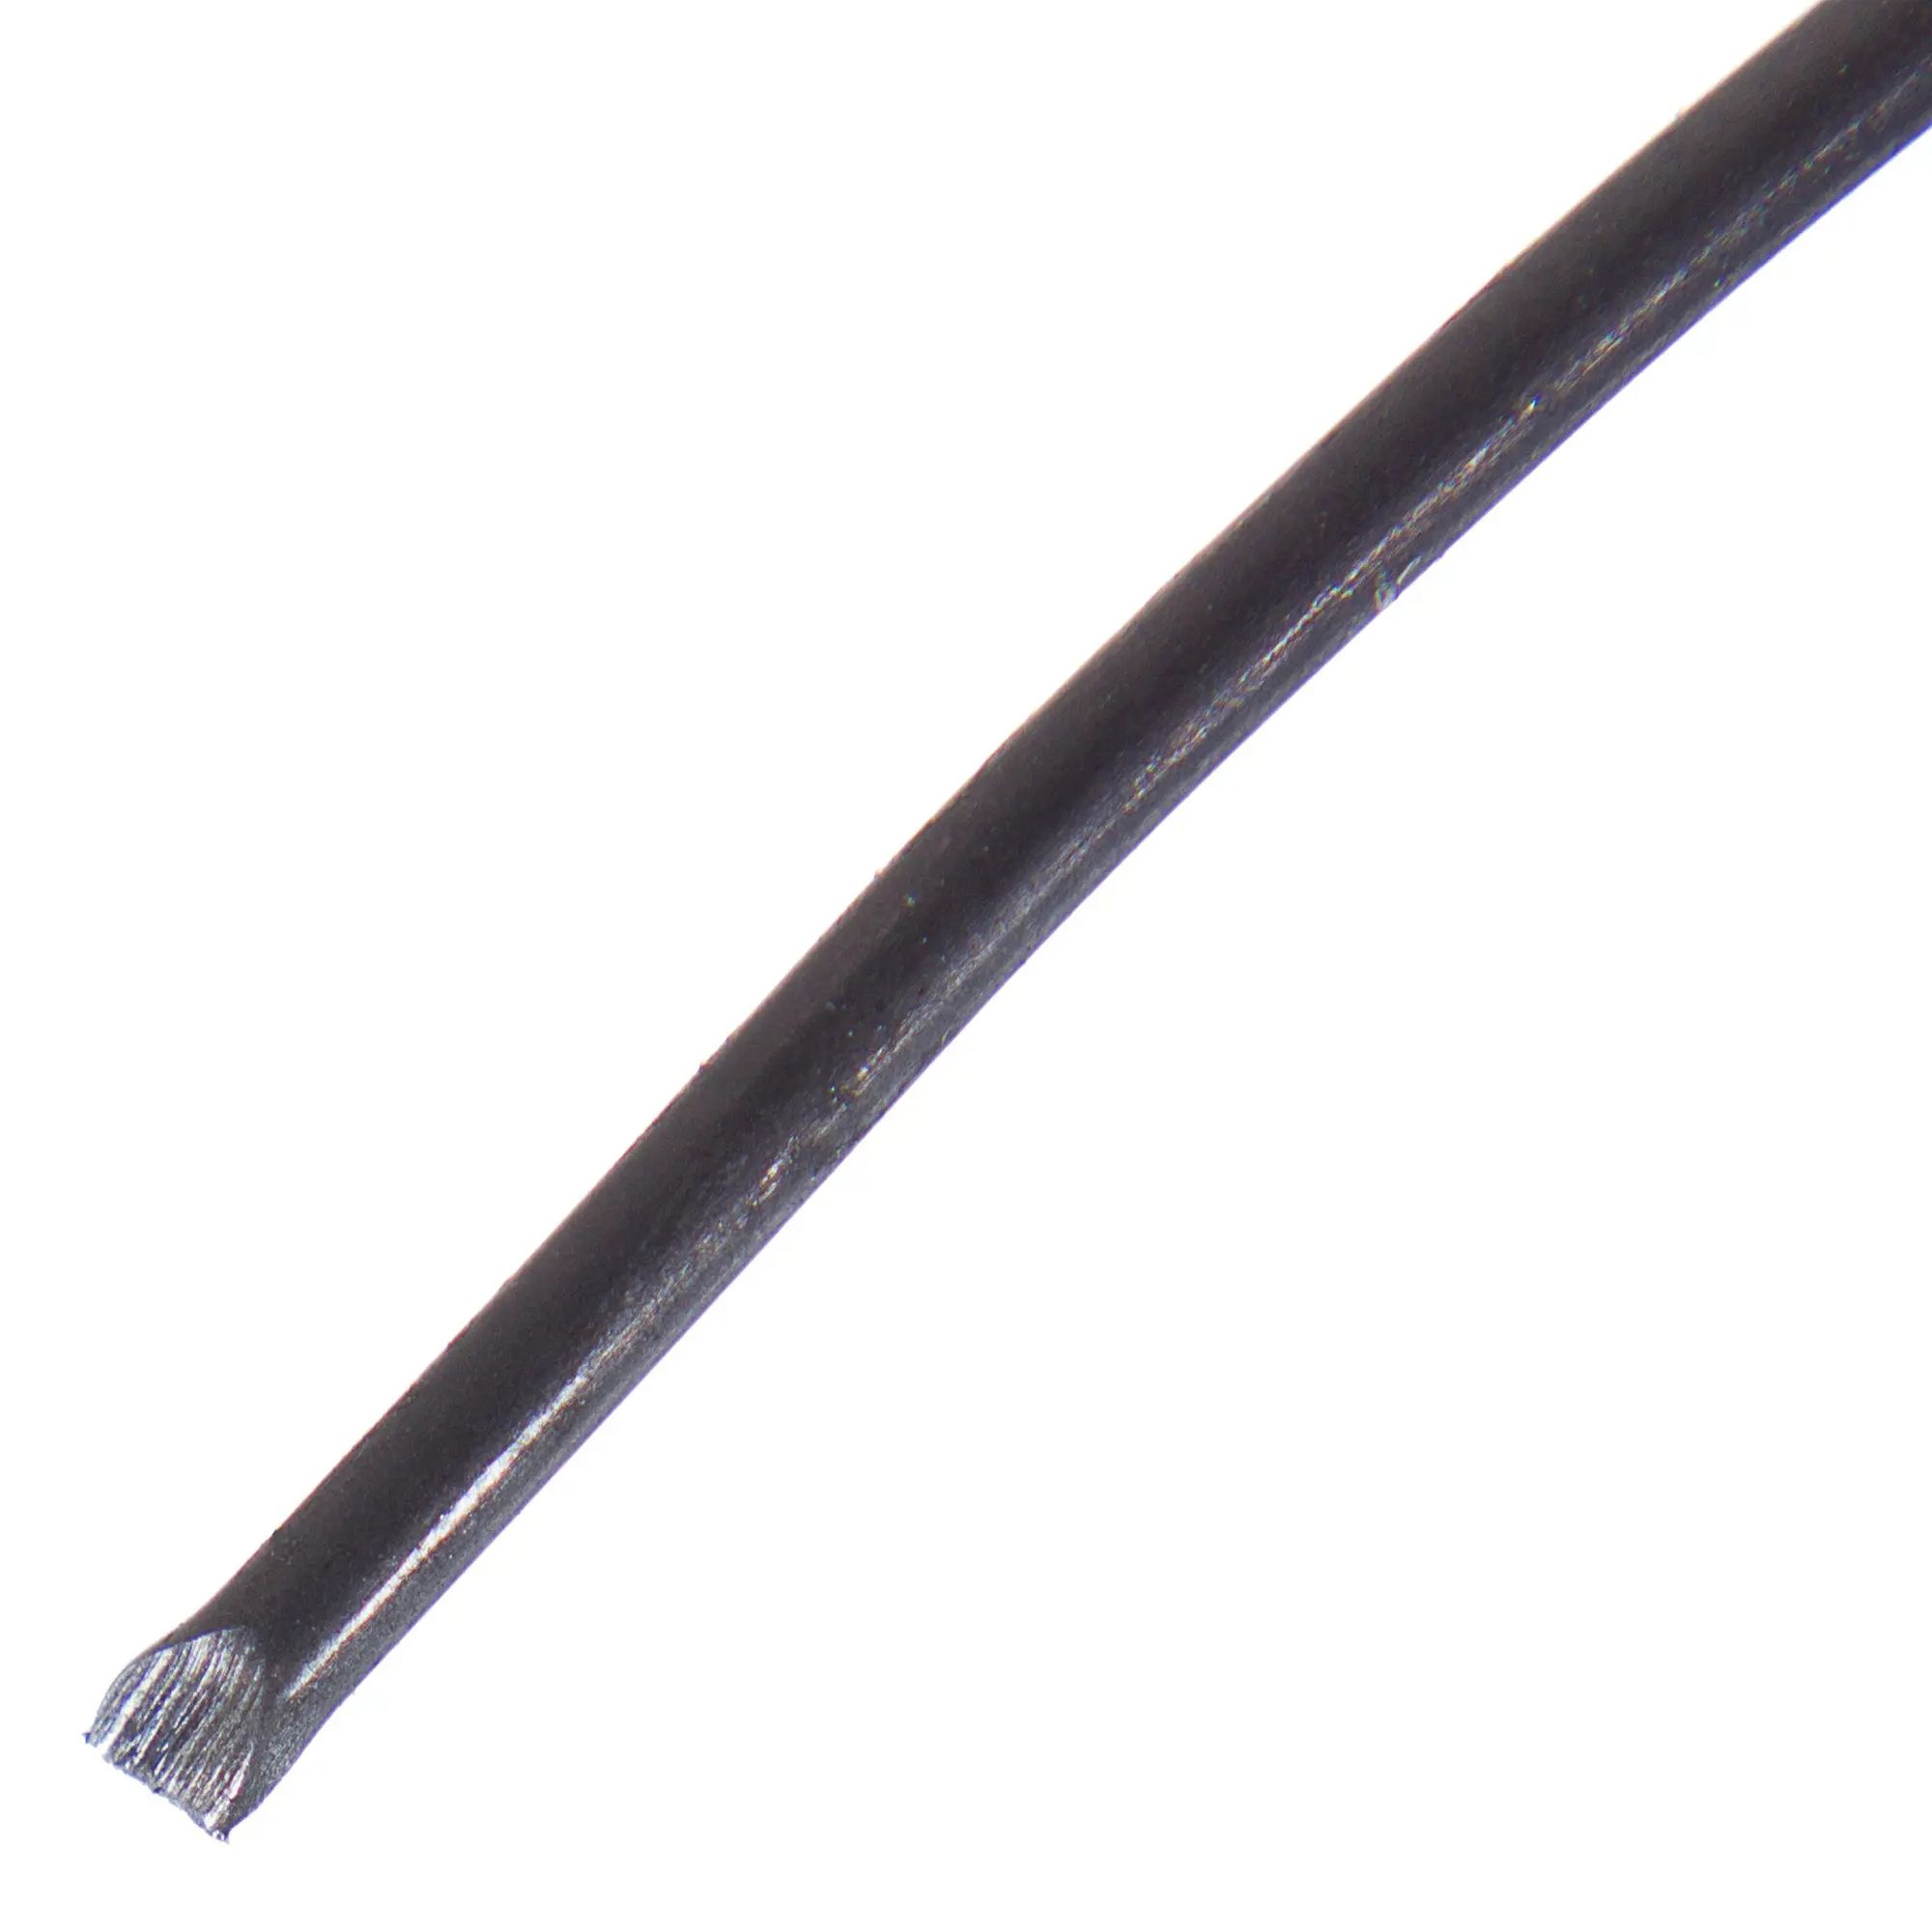 Вязальная проволока КРЕПКО-НАКРЕПКО, 47921, 1,2 мм, клубок, 200 г вязальная стальная проволока крепко накрепко